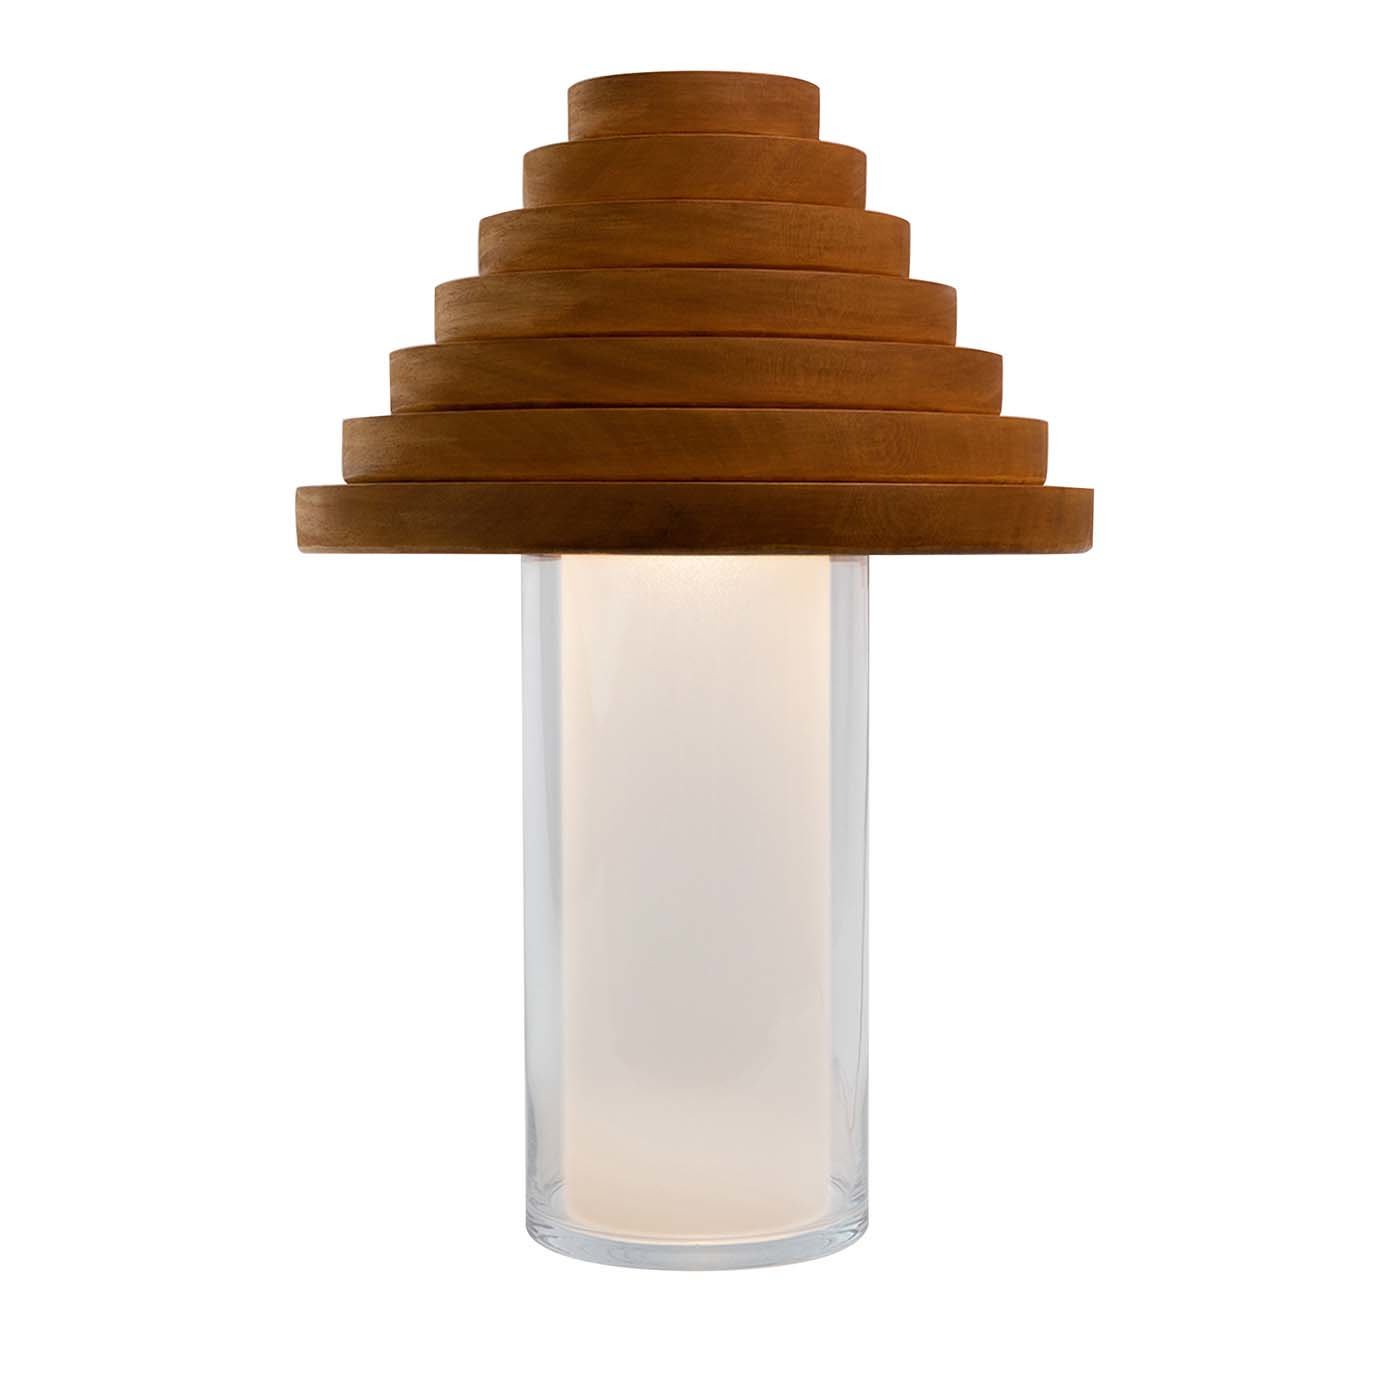 Samaku Table Lamp by brArt_lab - BrArtdesign